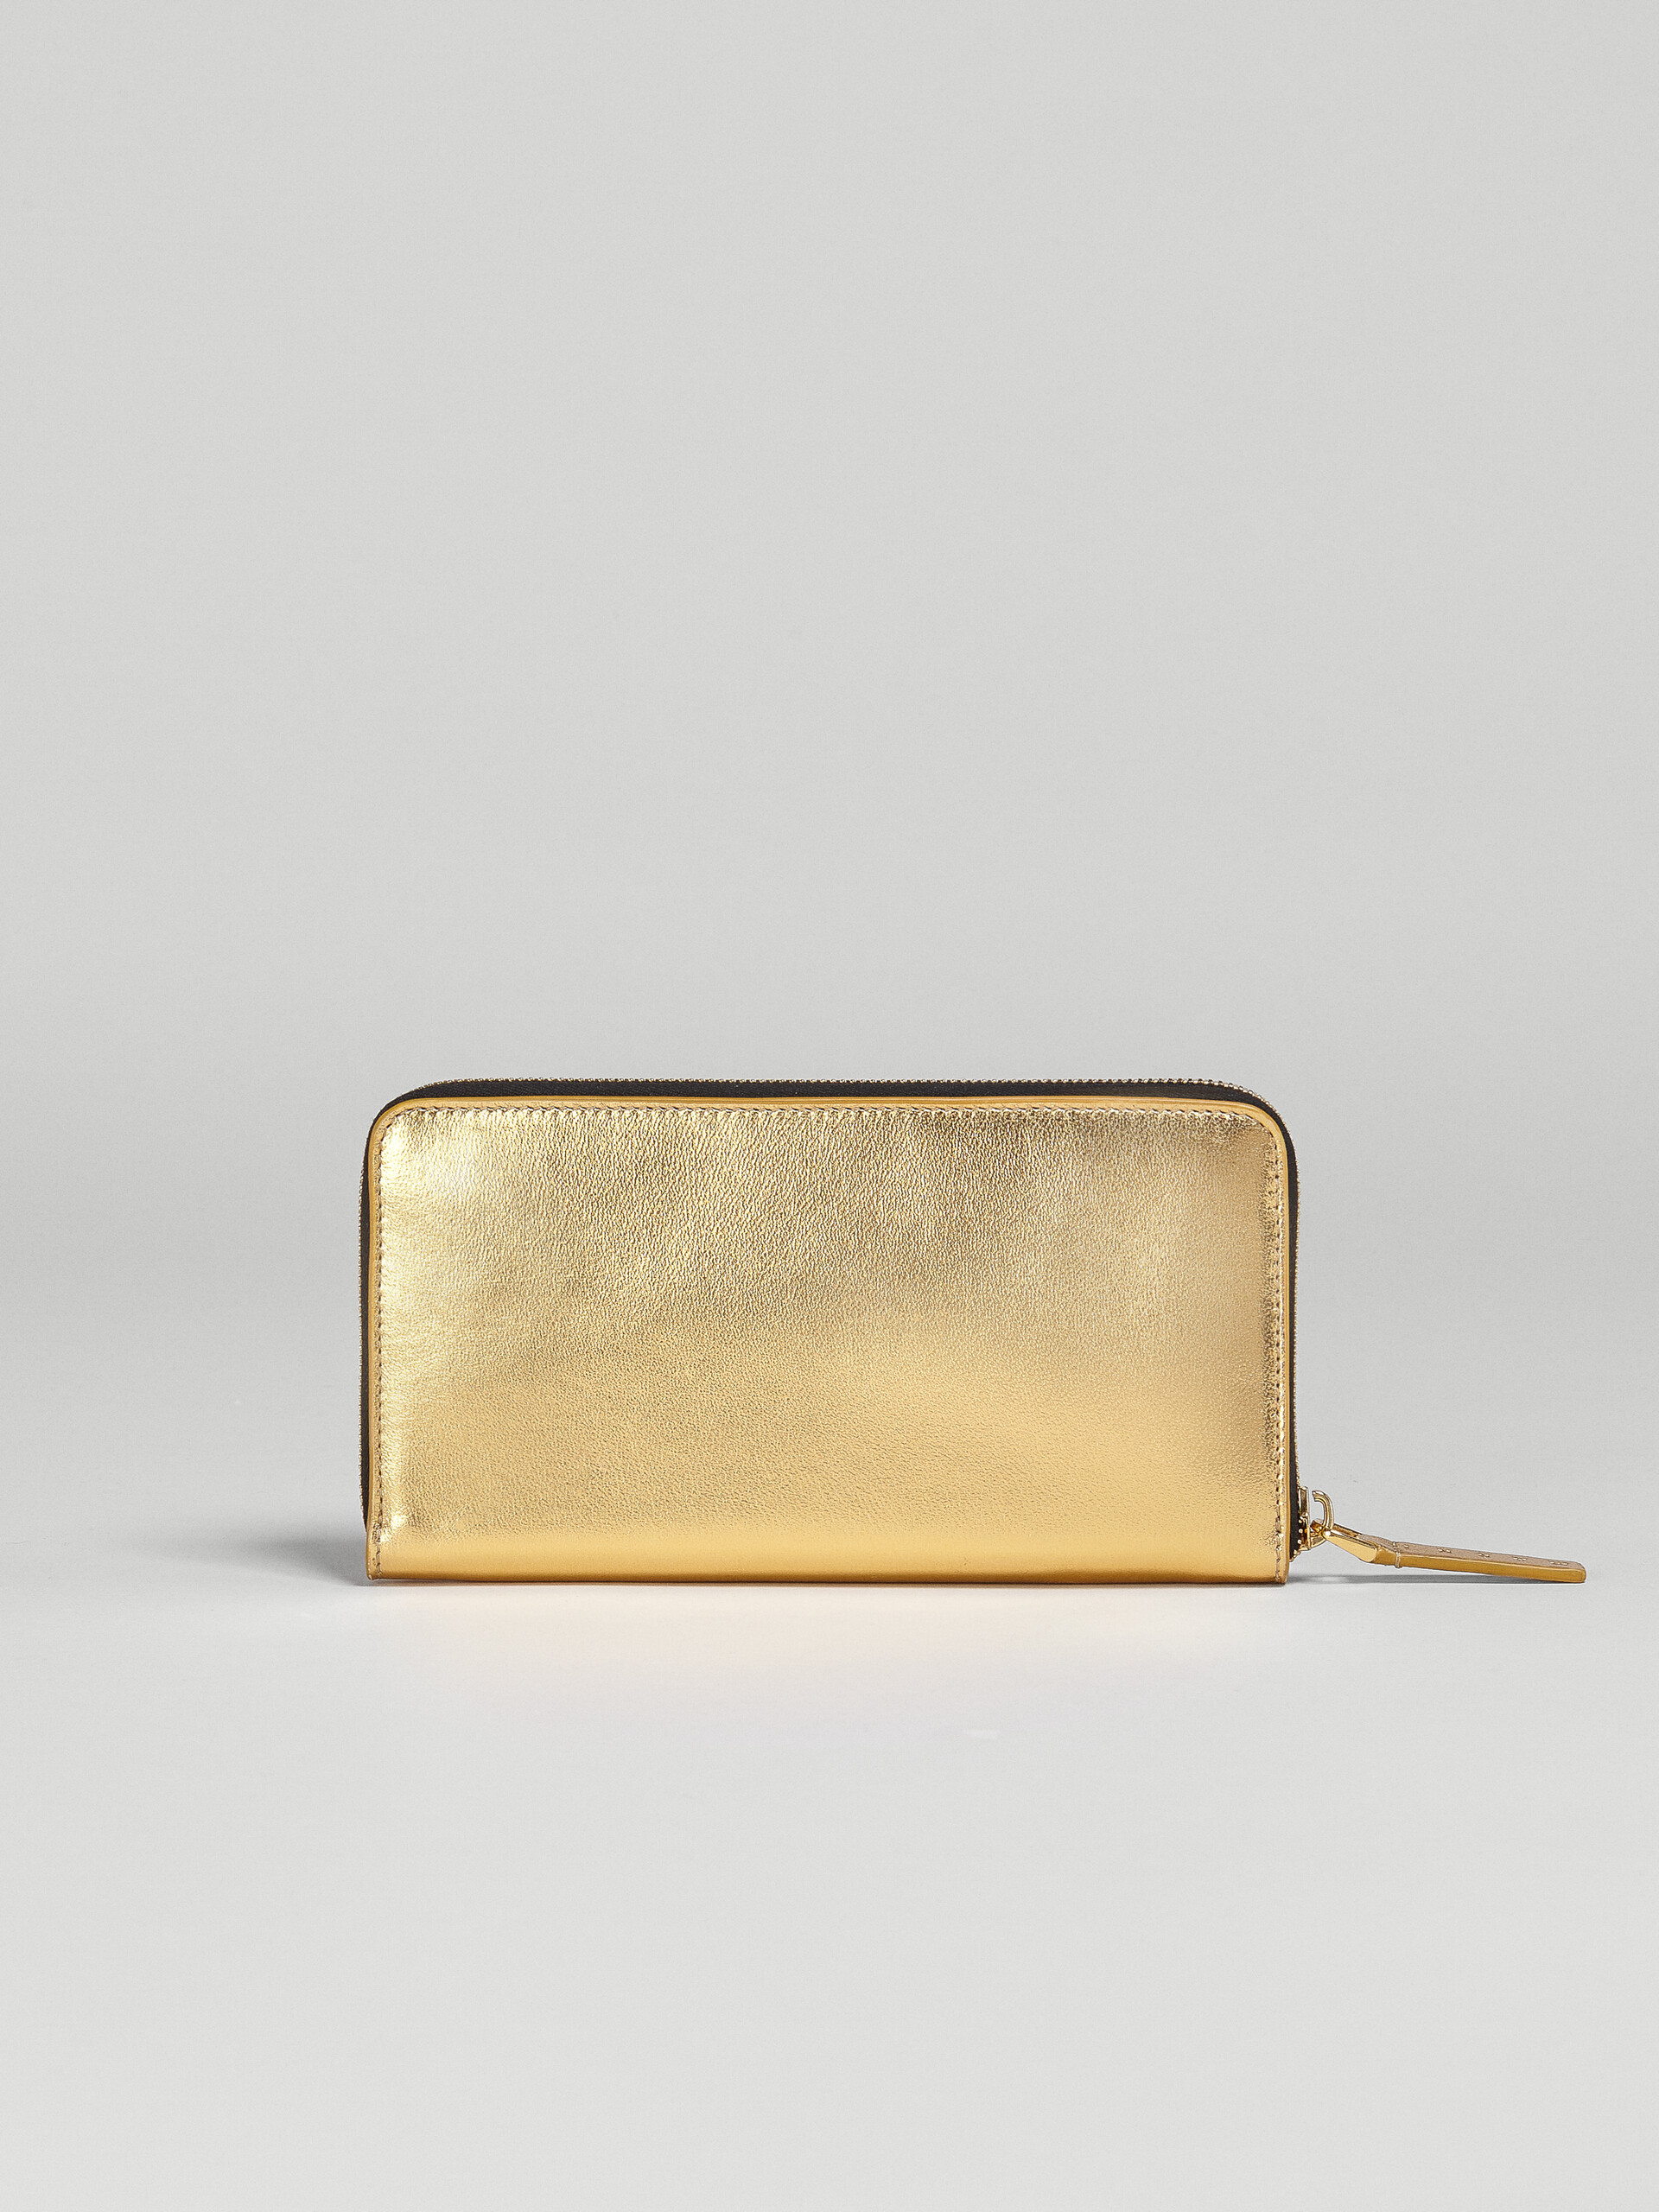 Gold metallic leather zip-around wallet - Wallets - Image 3